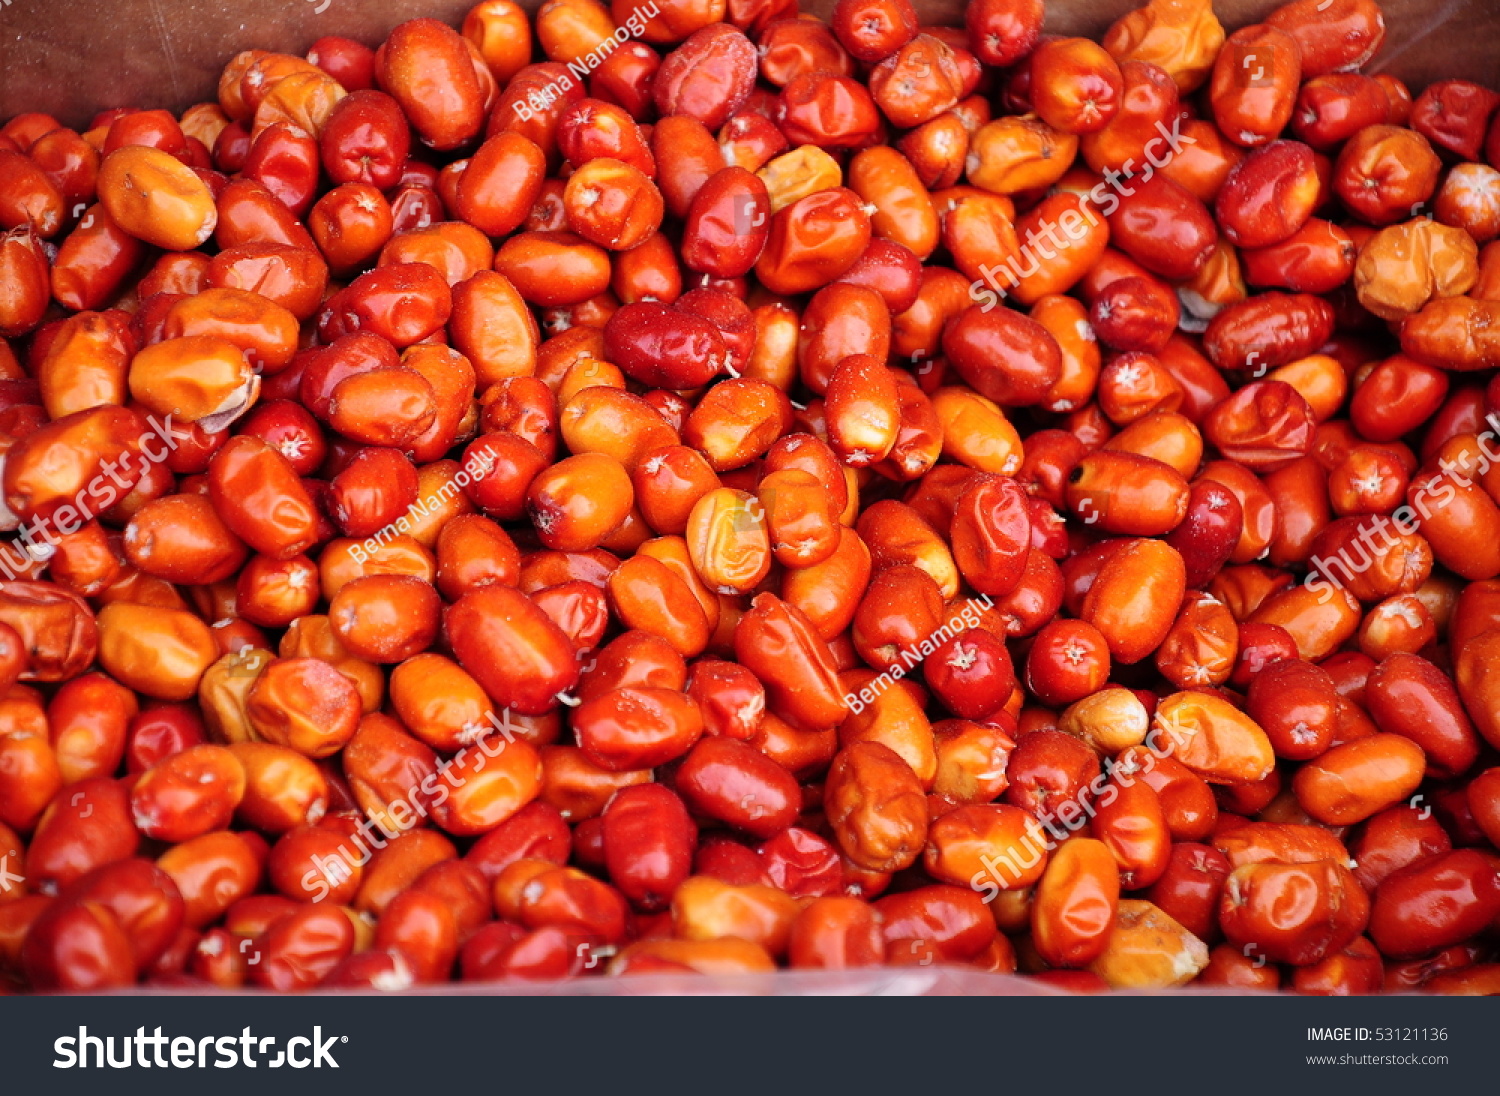 Russian Olive Fruit Oleaster Stock Photo 53121136 - Shutterstock